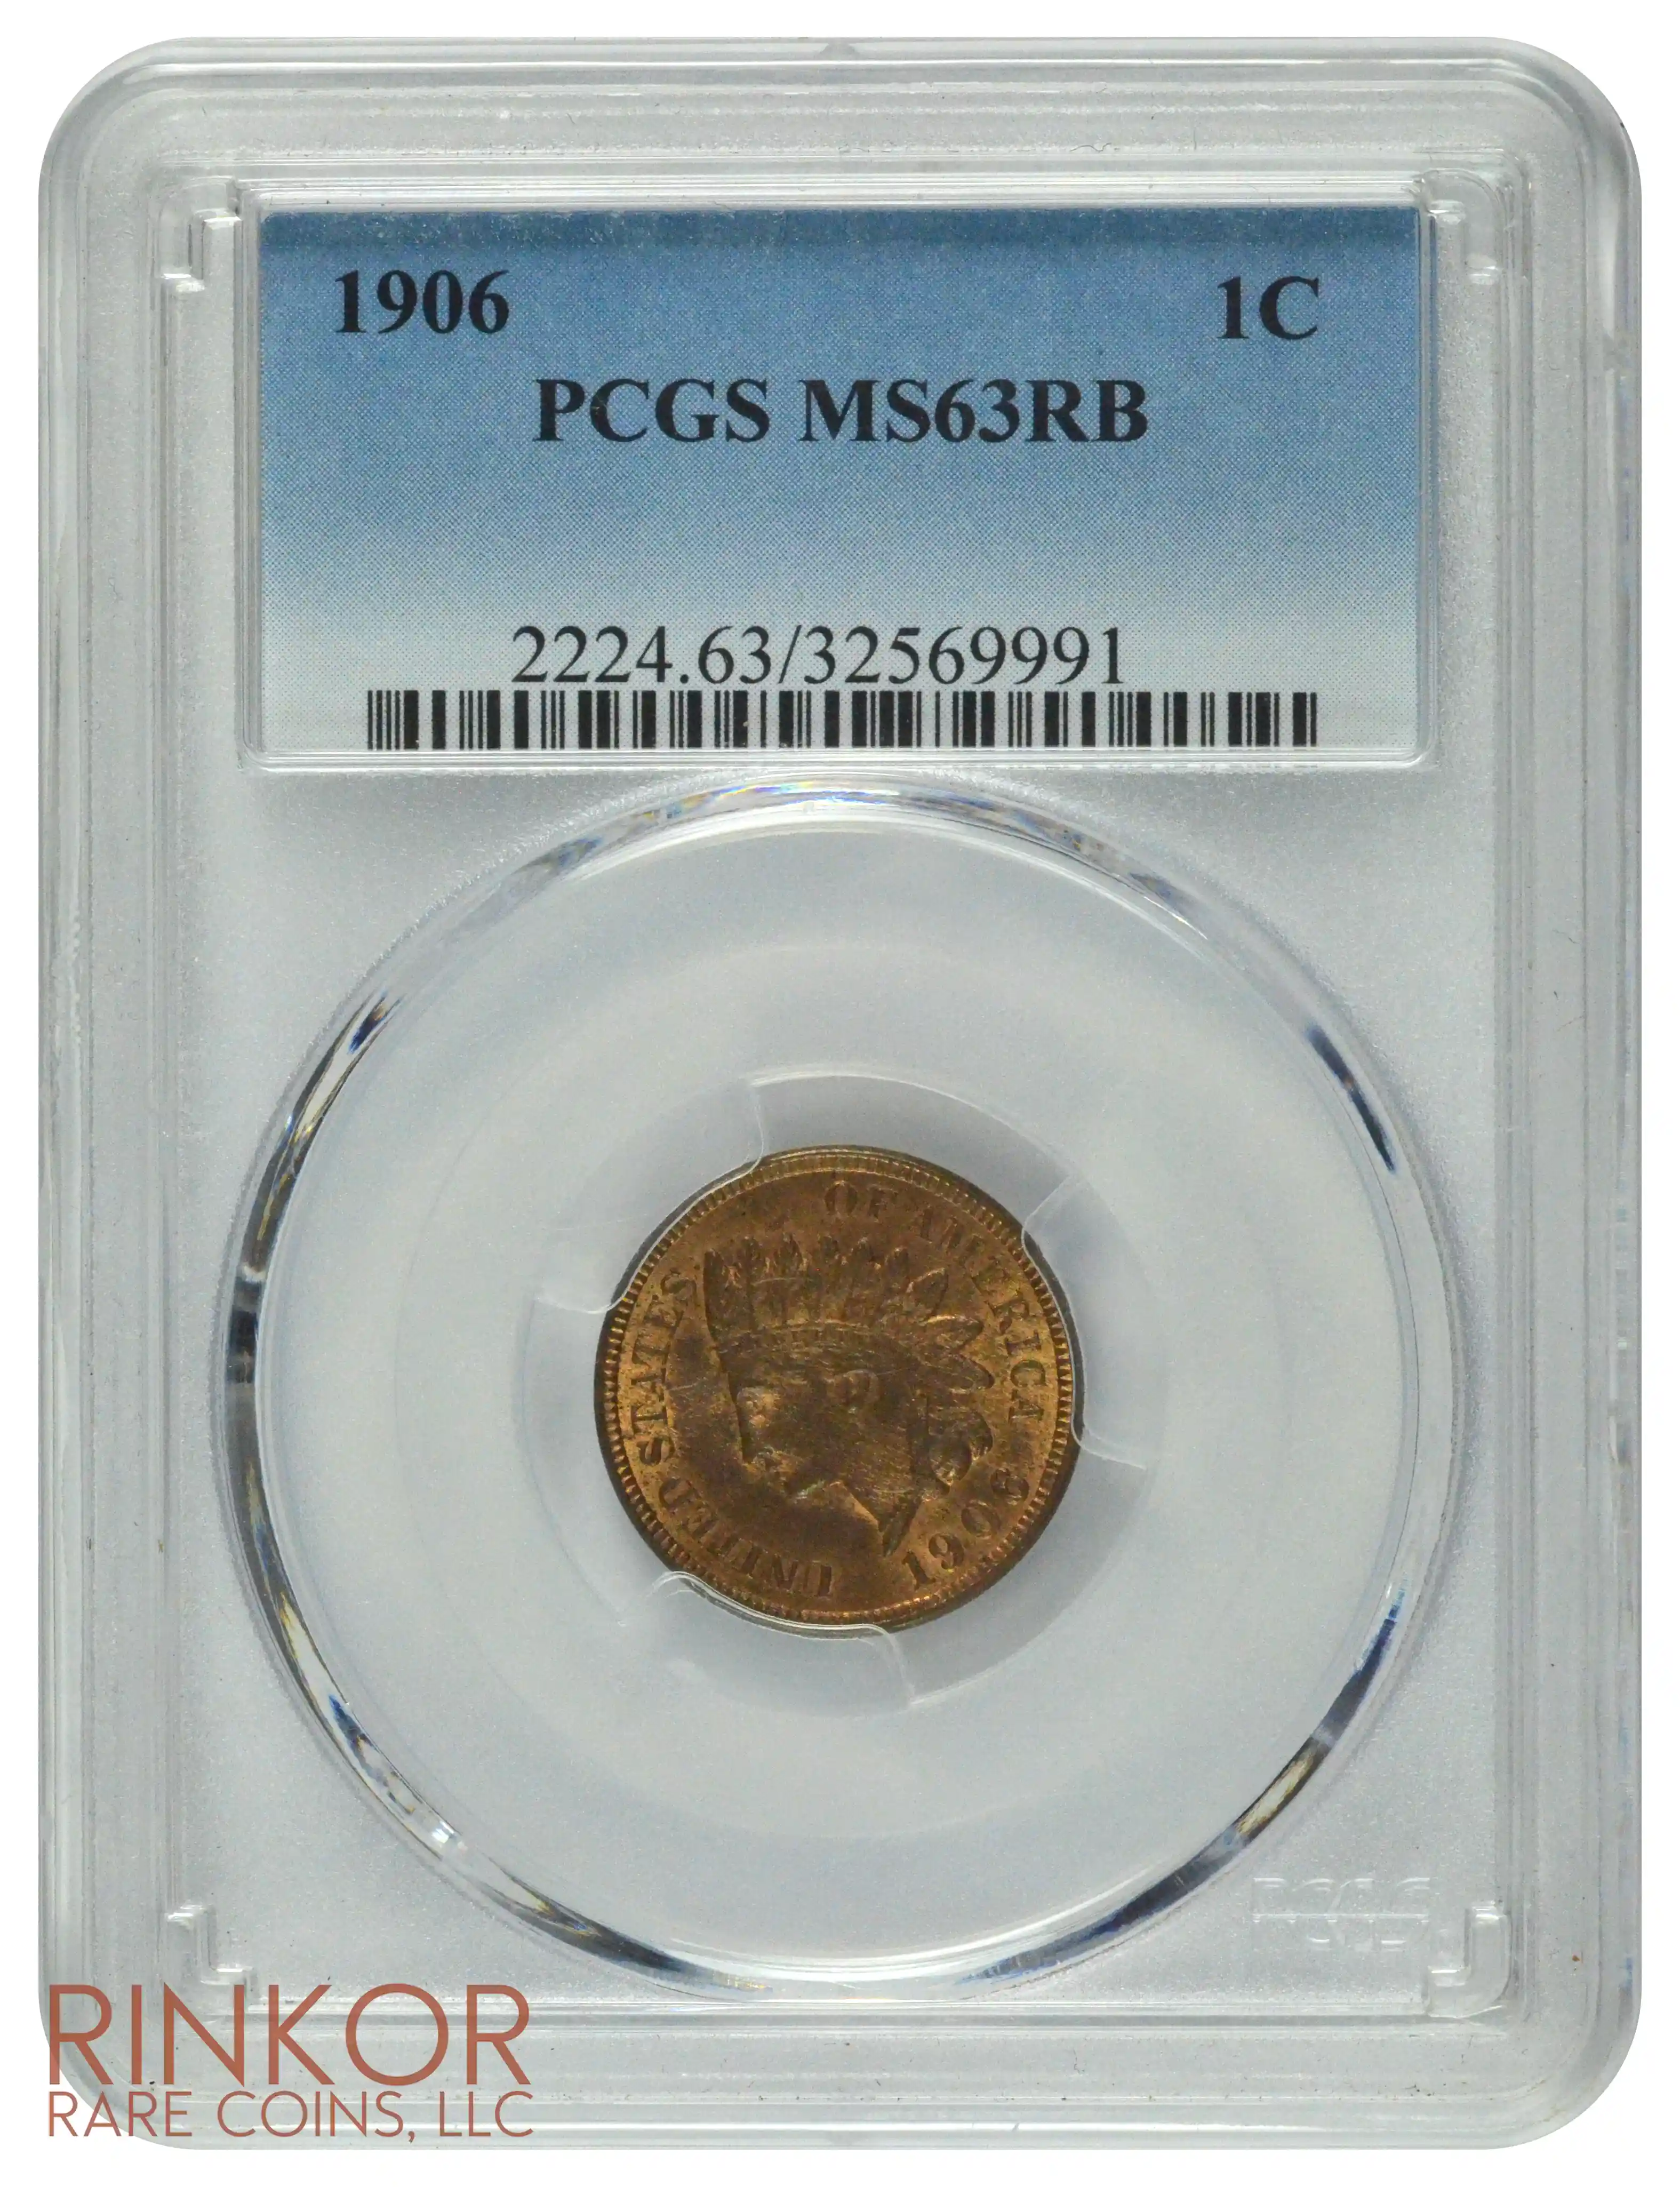 1906 1C PCGS MS 63 RB